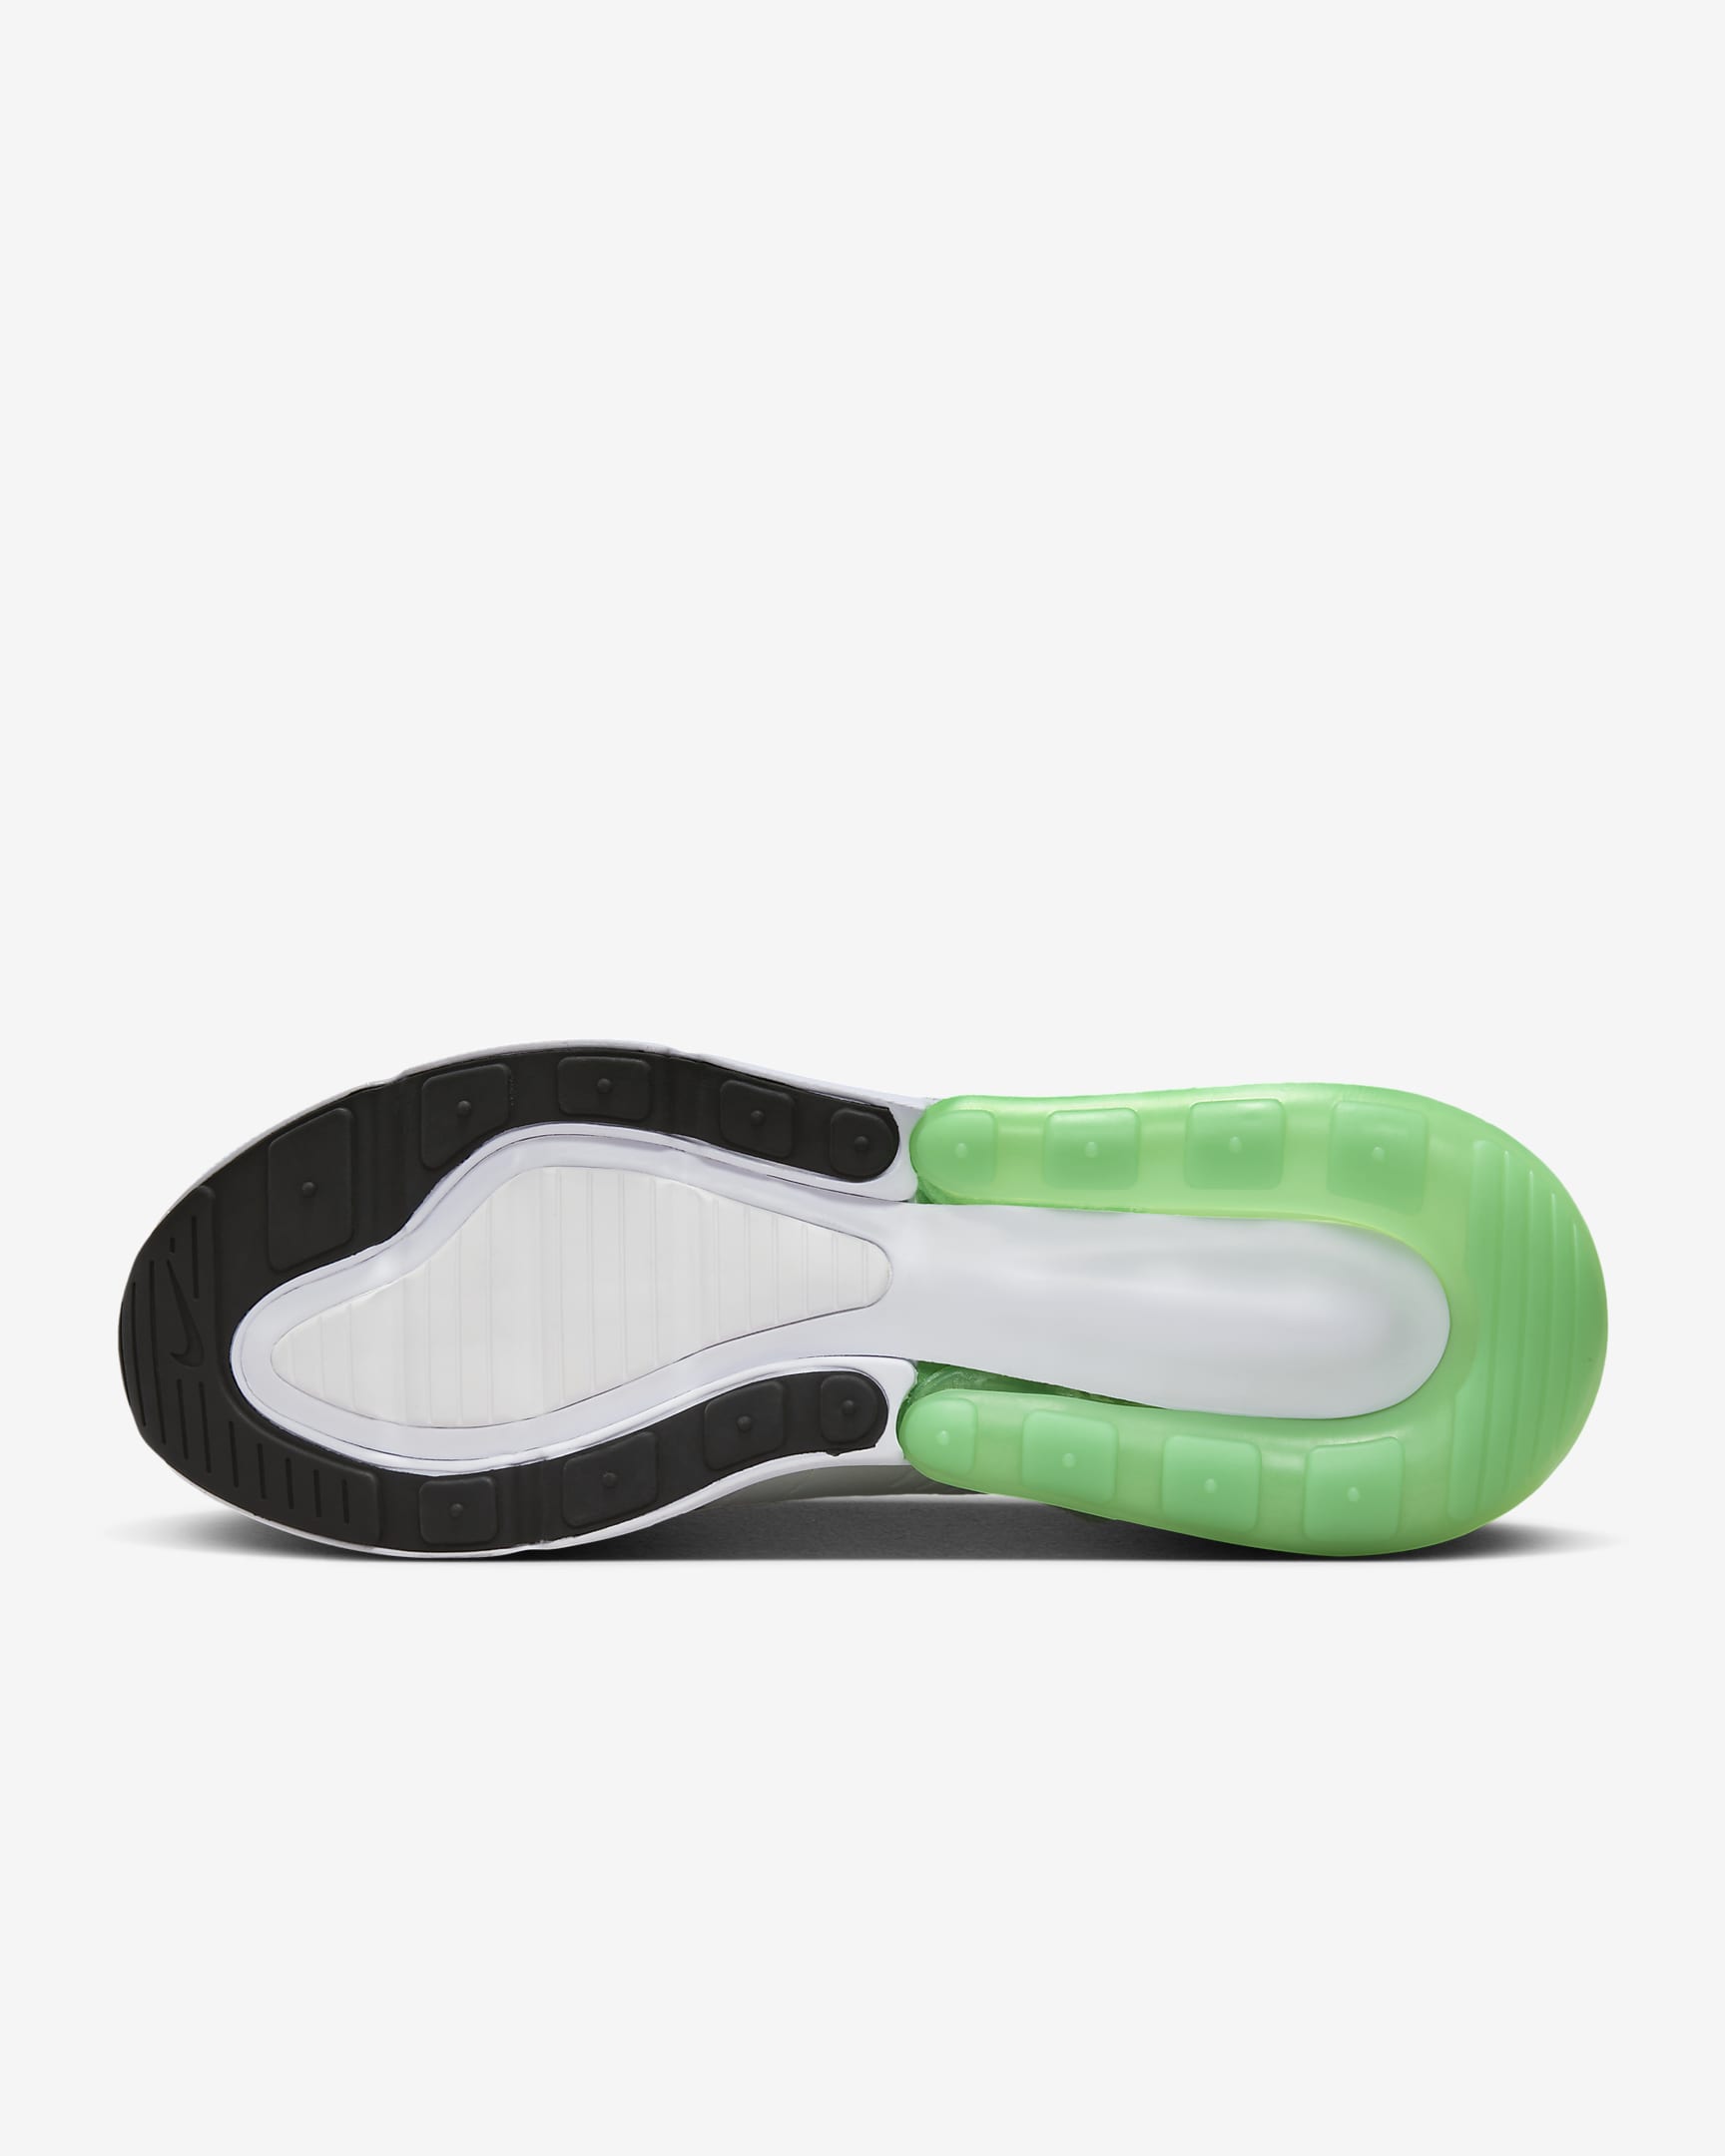 Nike Air Max 270 Men's Shoes - Light Silver/Black/White/Green Shock